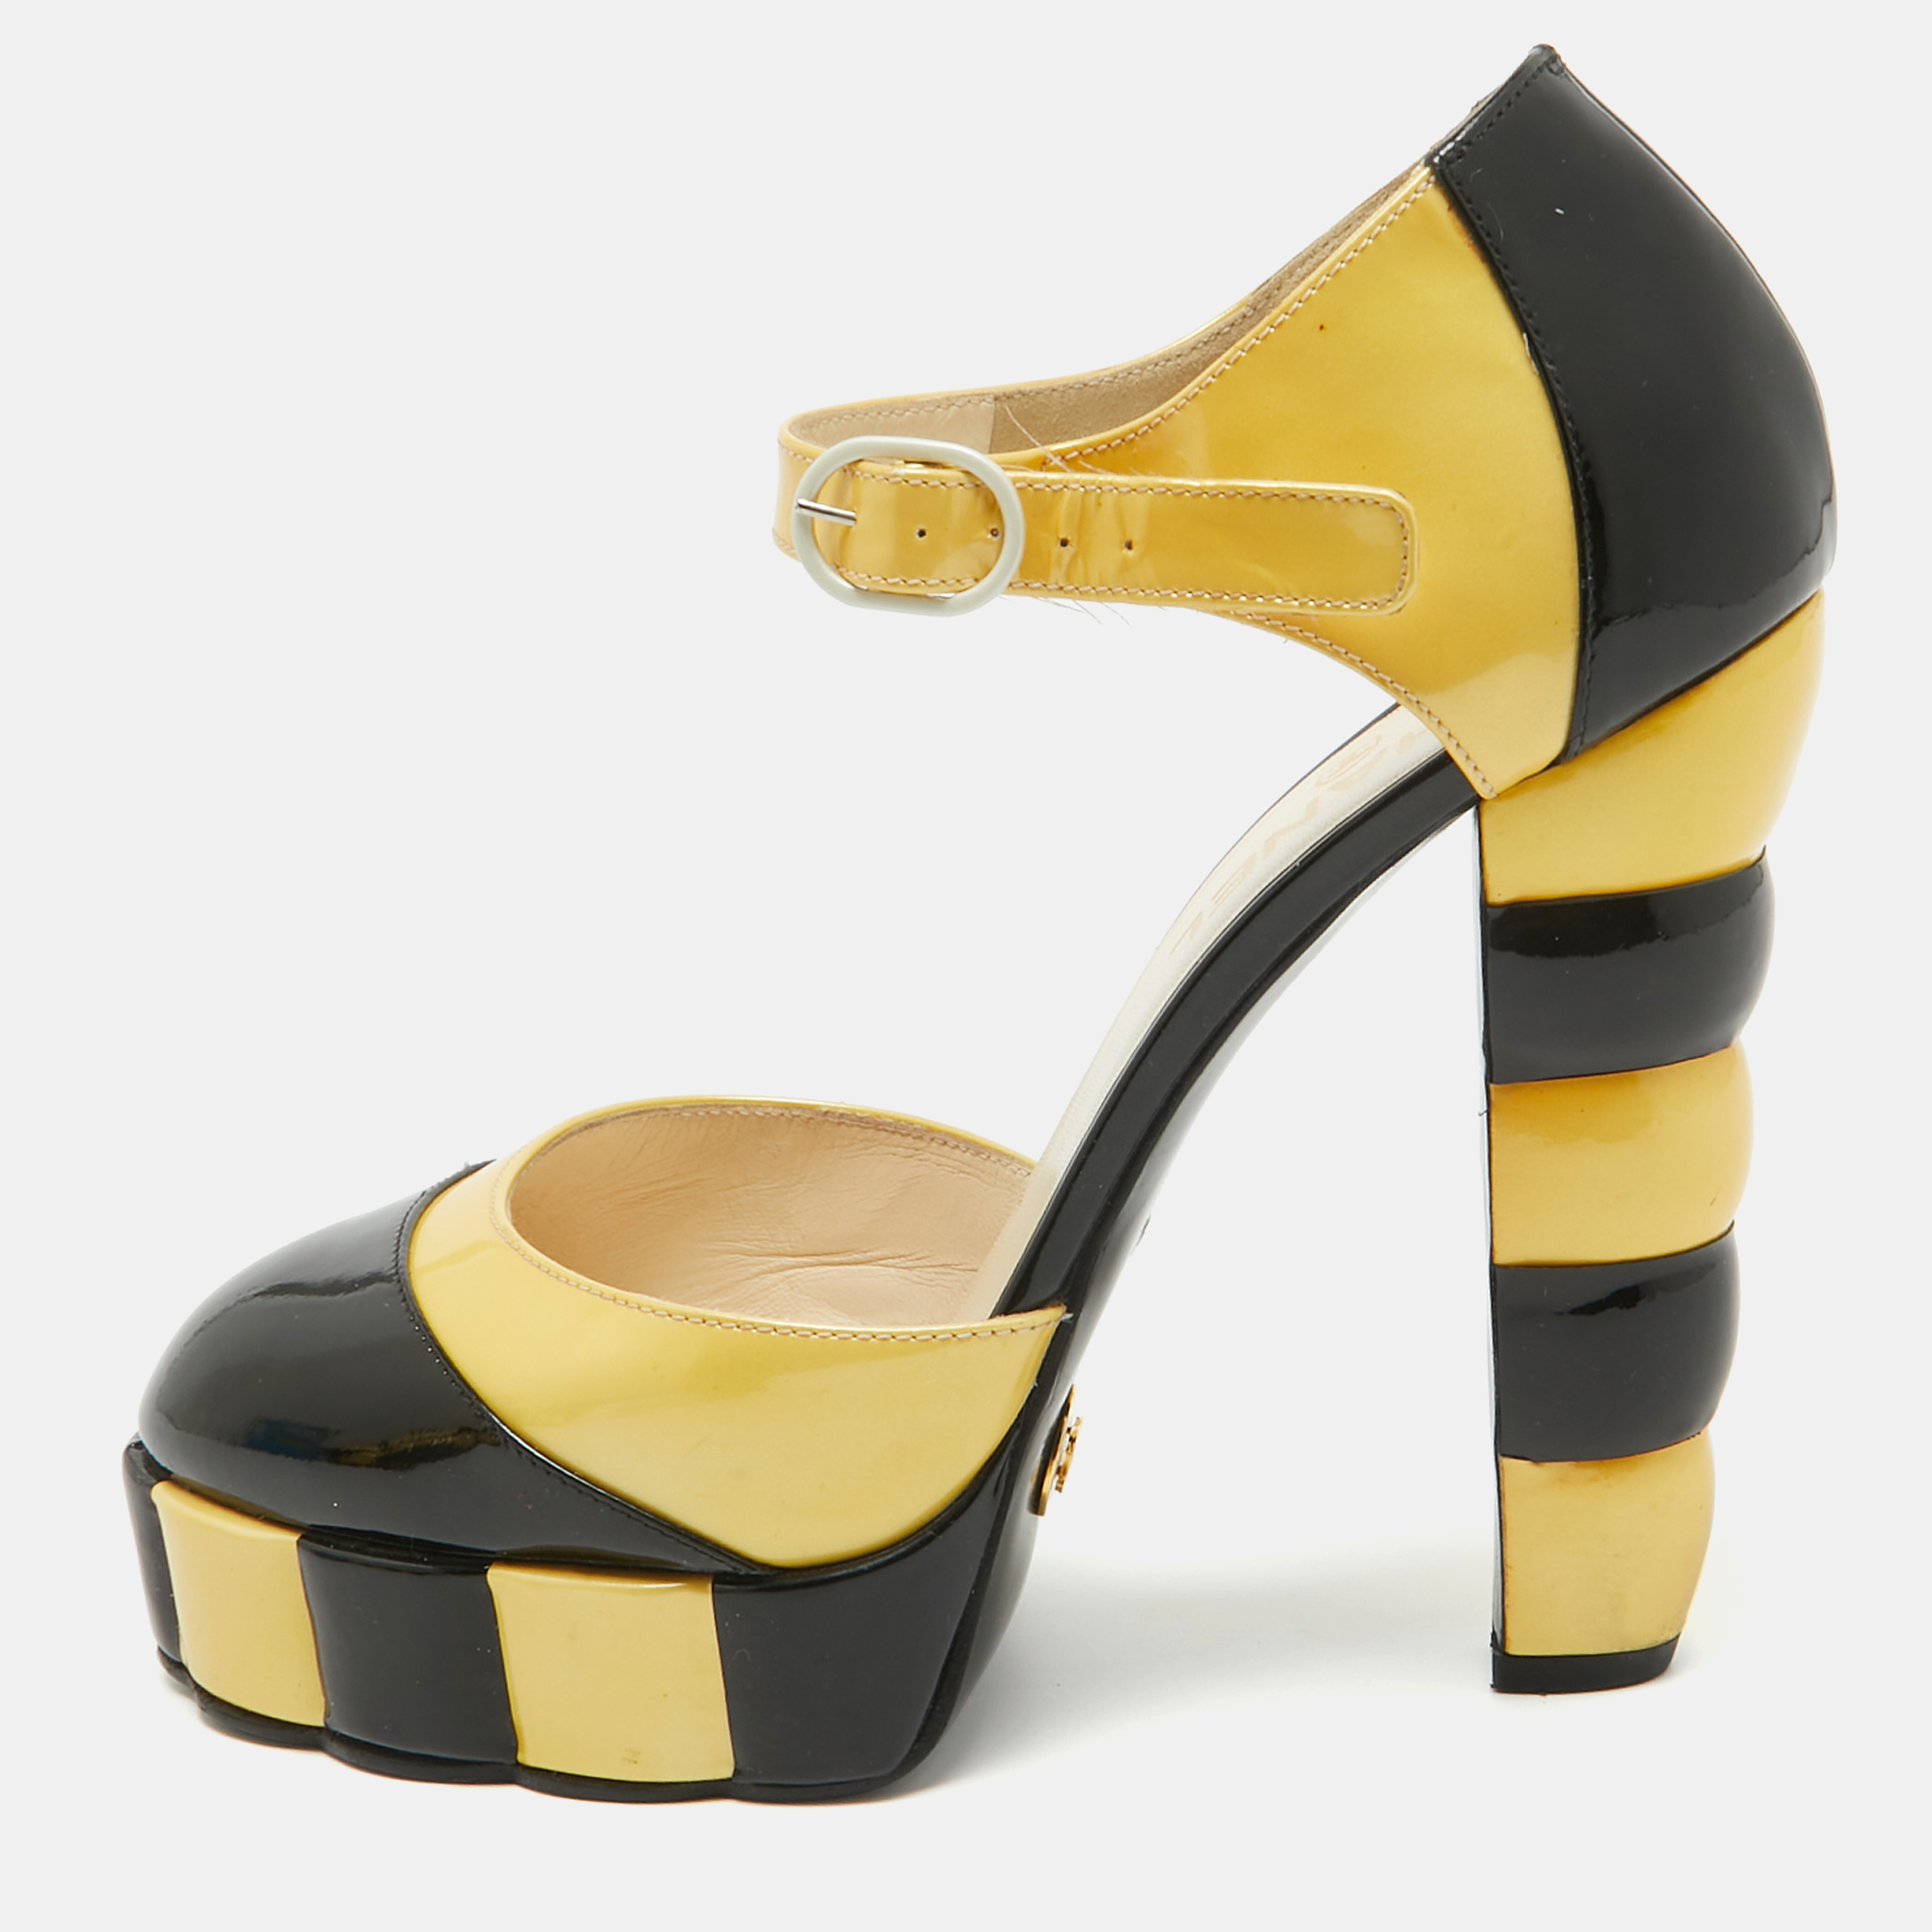 Chanel yellow/black patent leather platform ankle strap pumps size 39